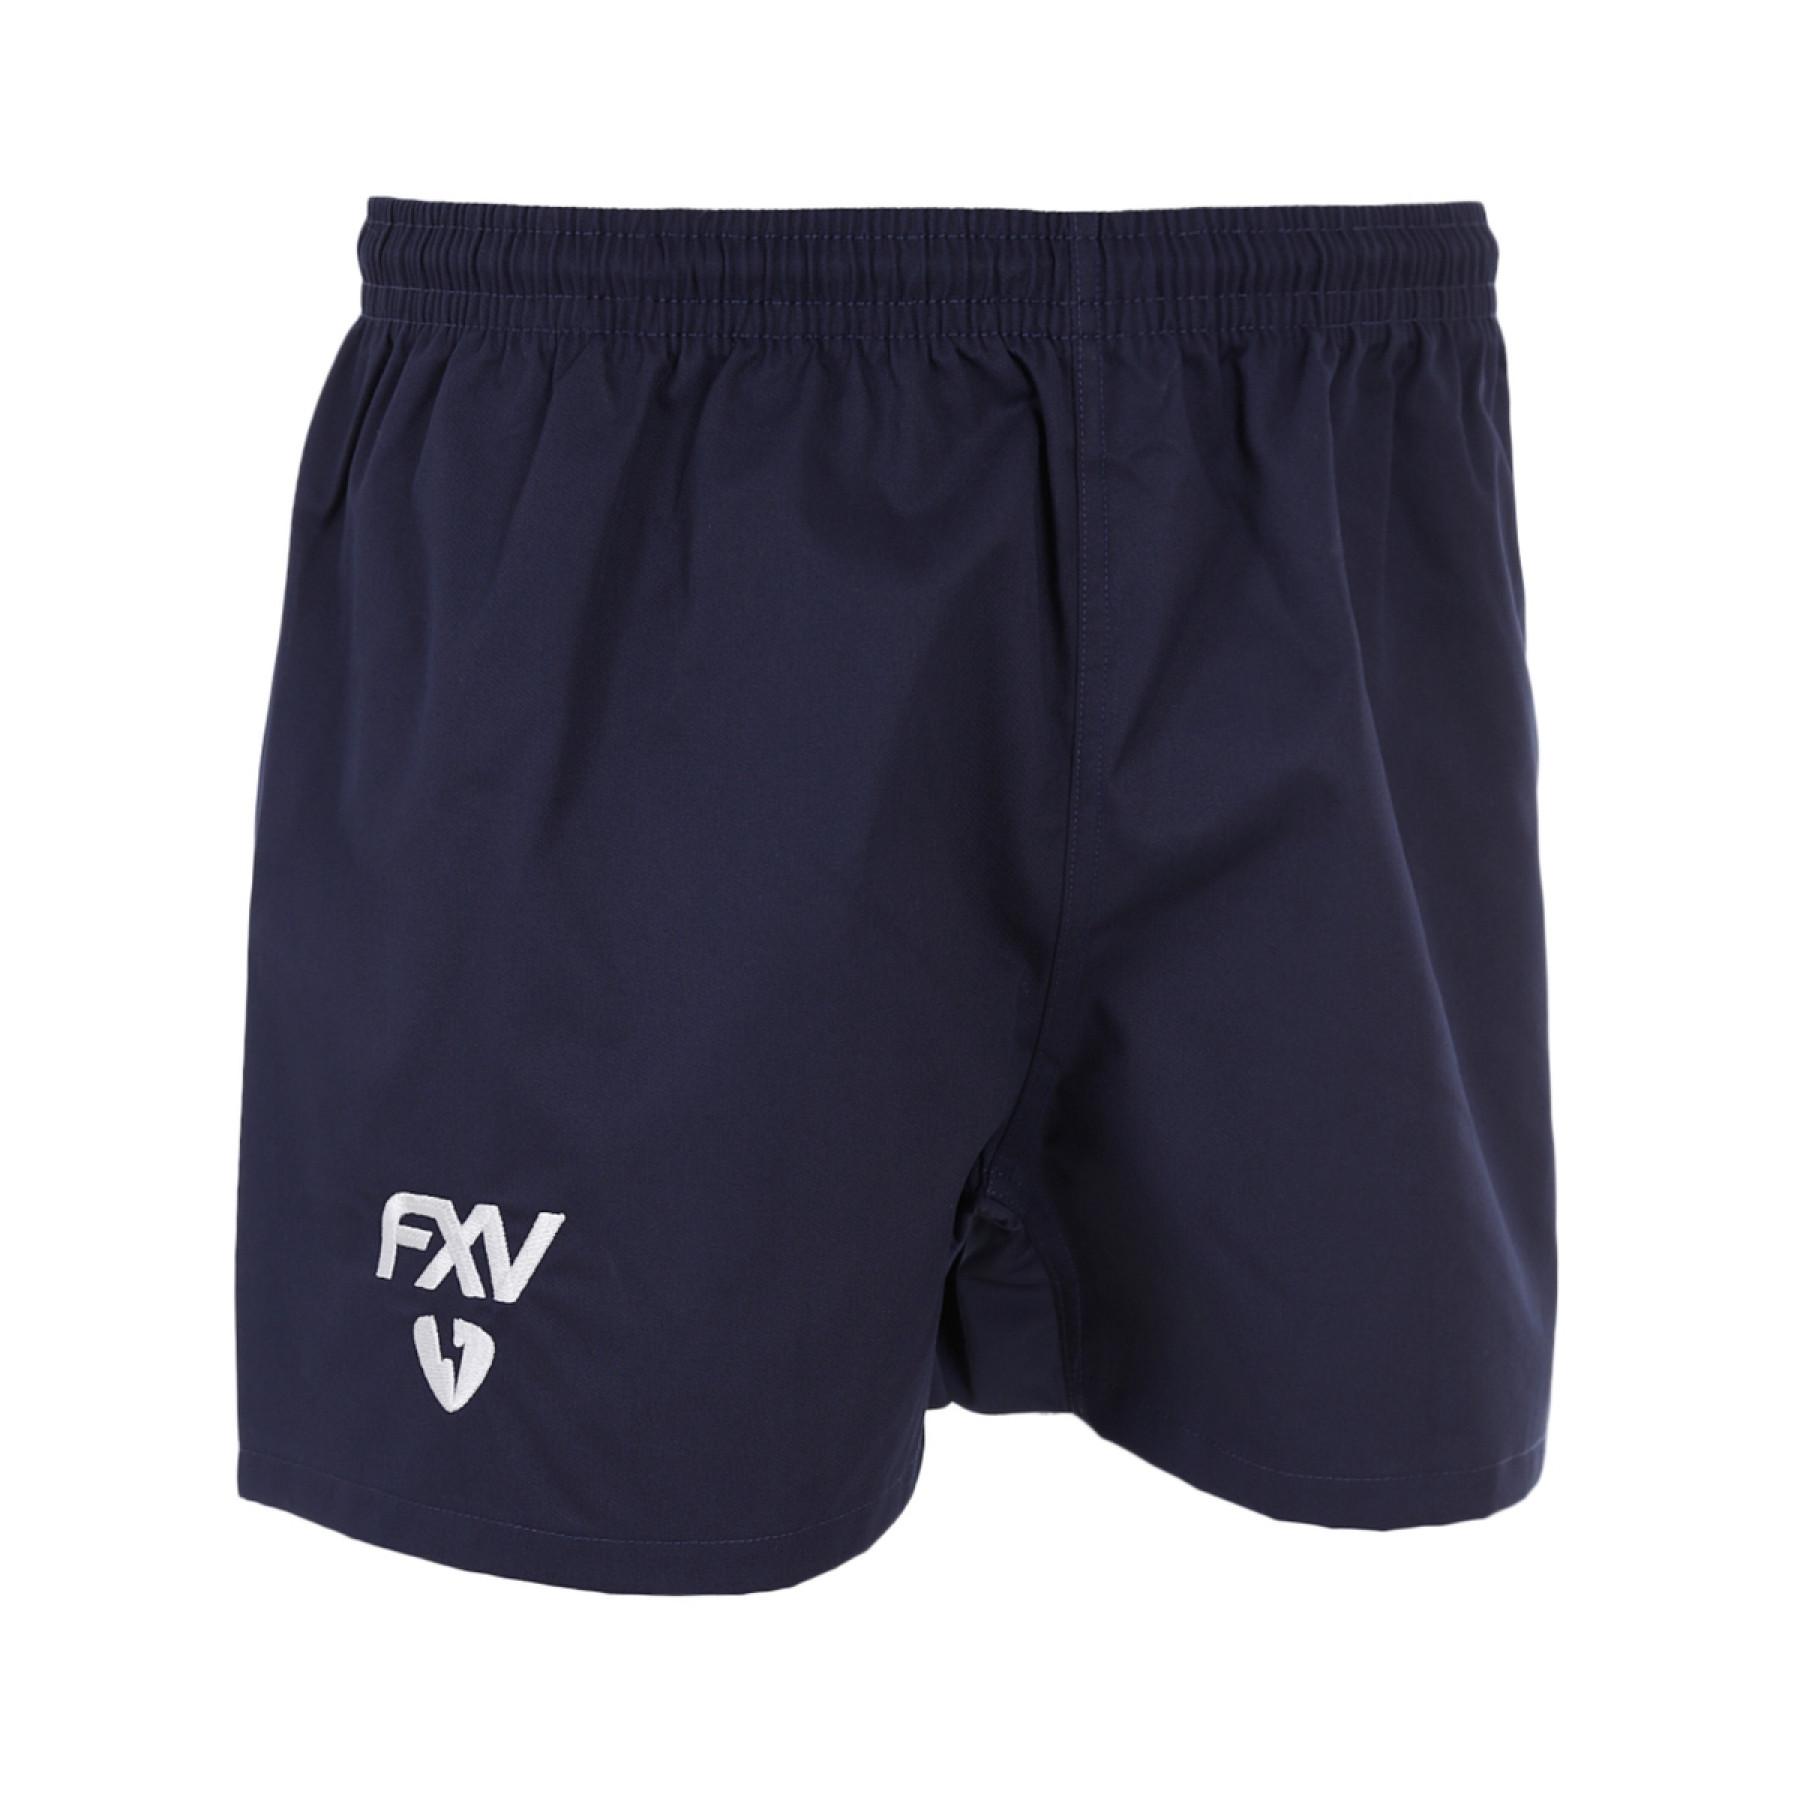 Pantaloncini Force XV pixy